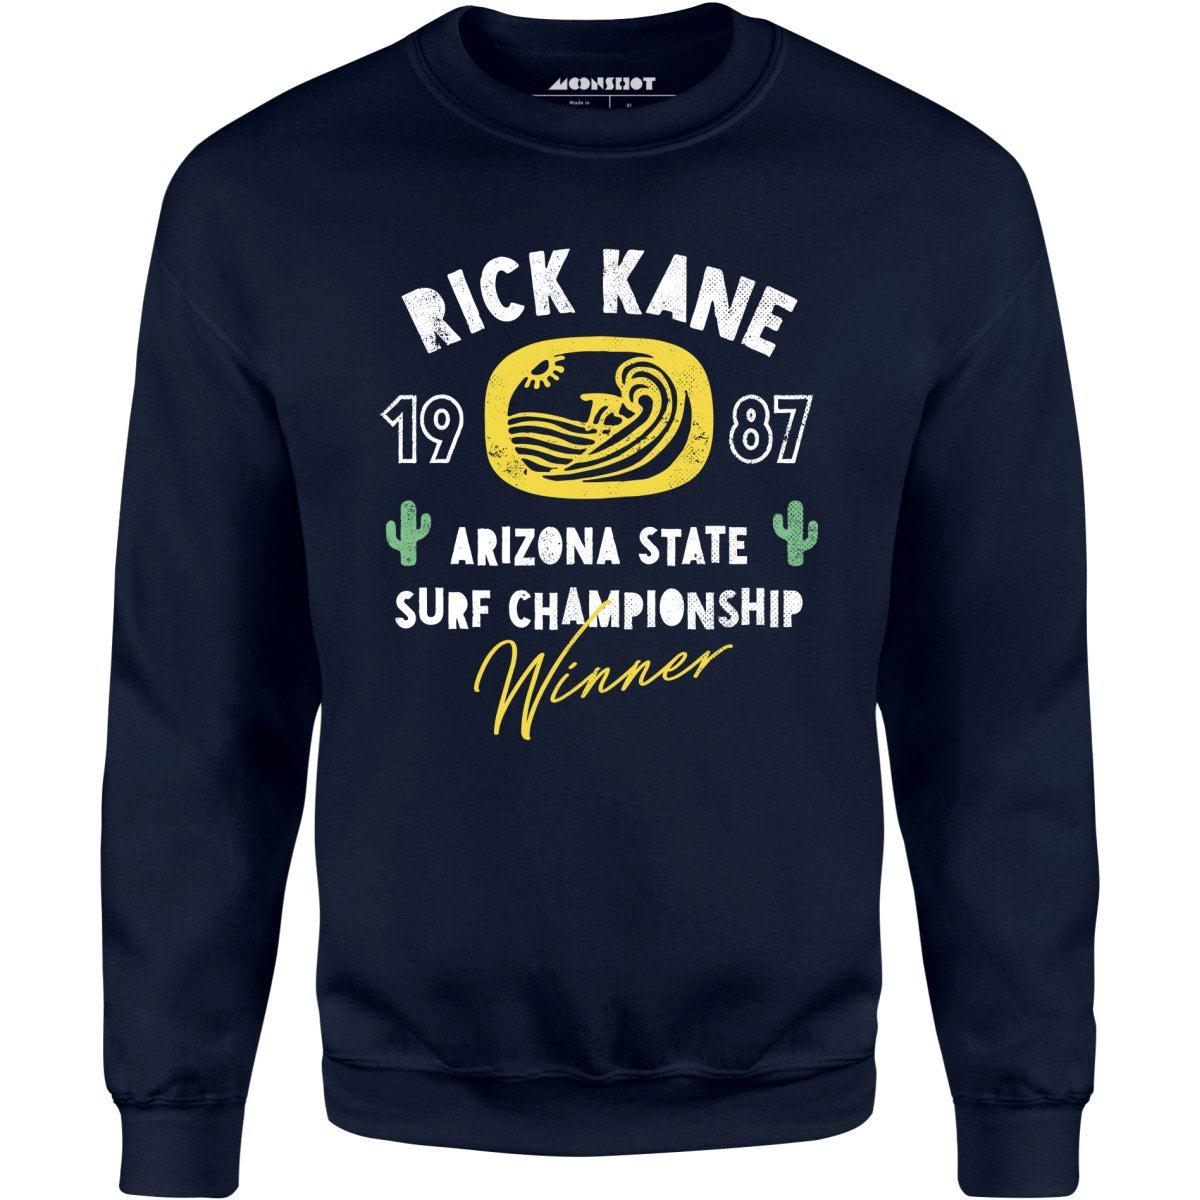 Rick Kane - Arizona State Surf Championship - Unisex Sweatshirt